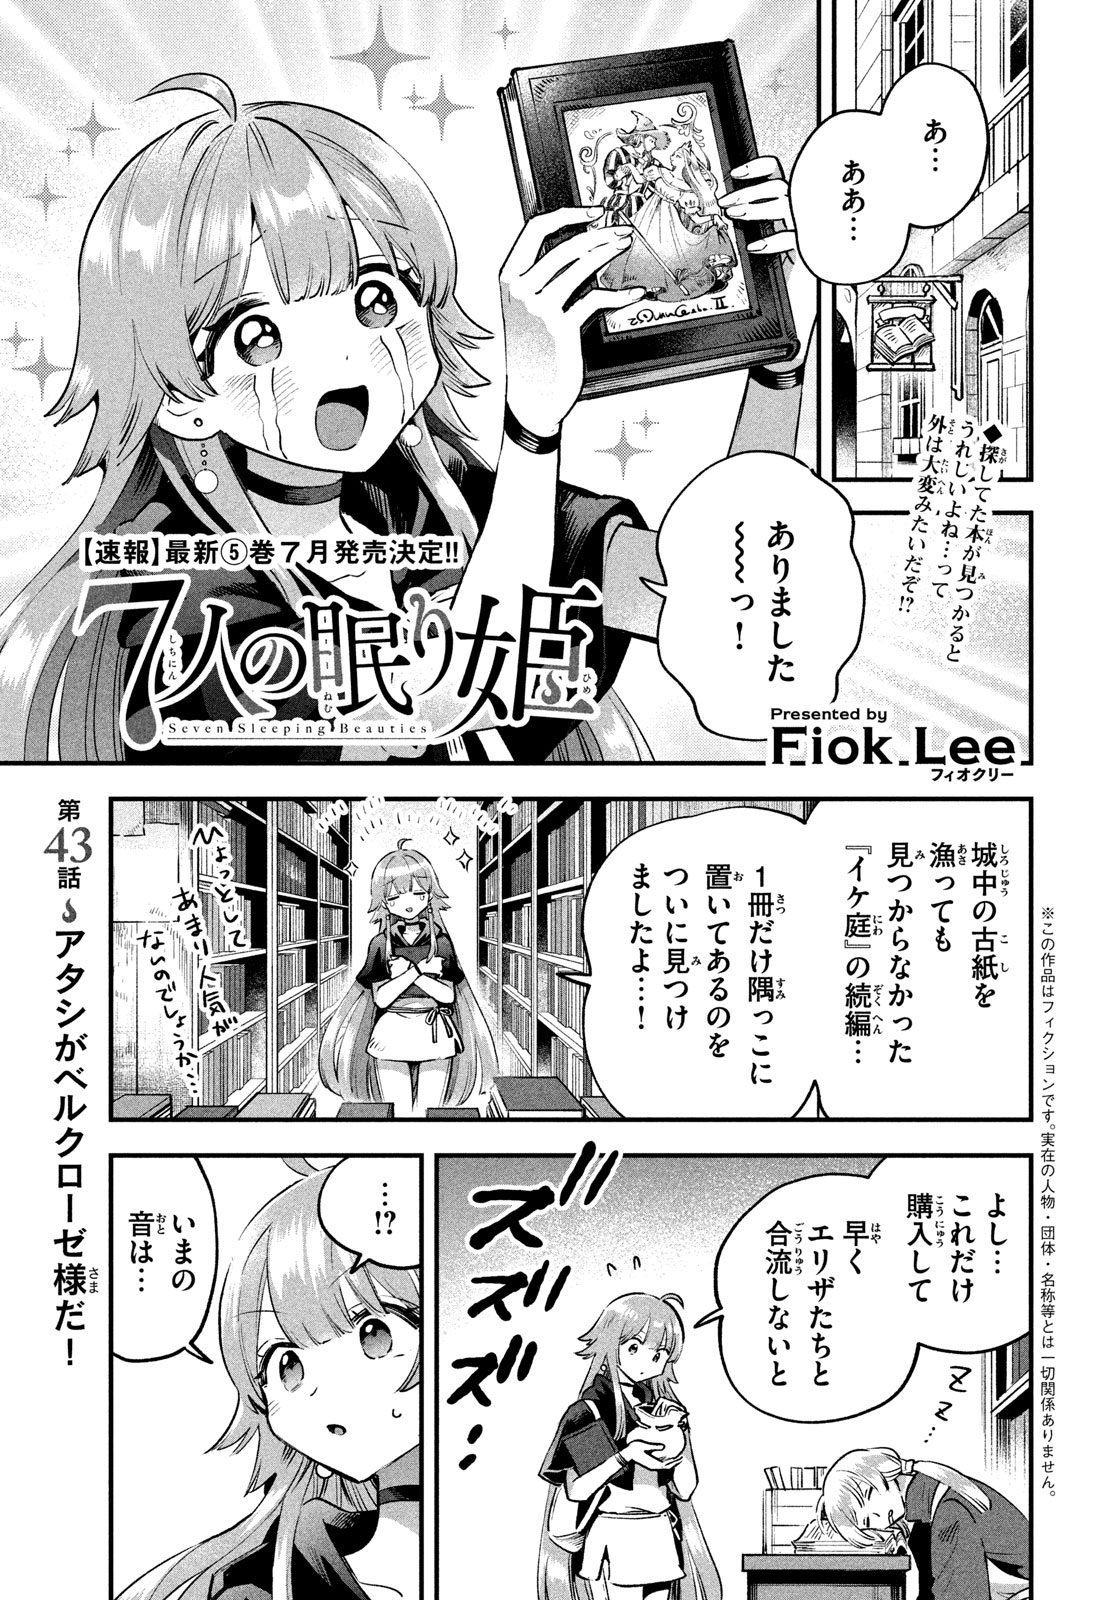 7-nin no Nemuri Hime - Chapter 43 - Page 1